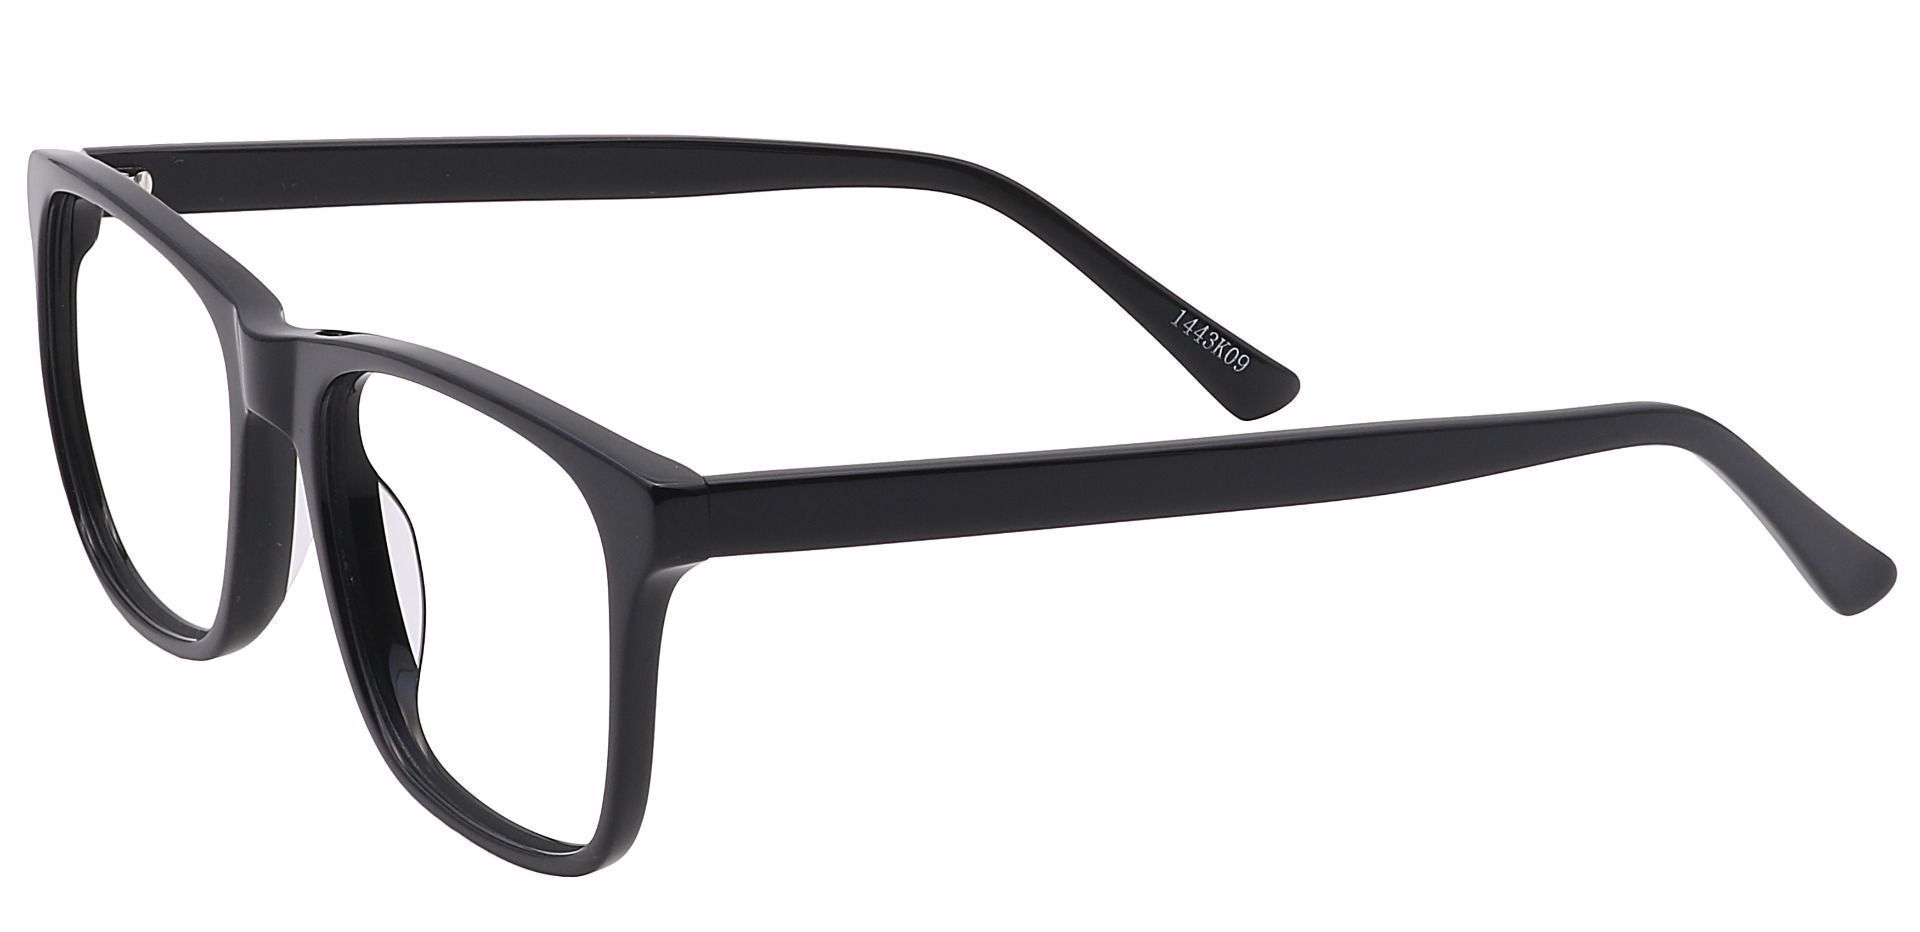 Cantina Square Lined Bifocal Glasses - Black